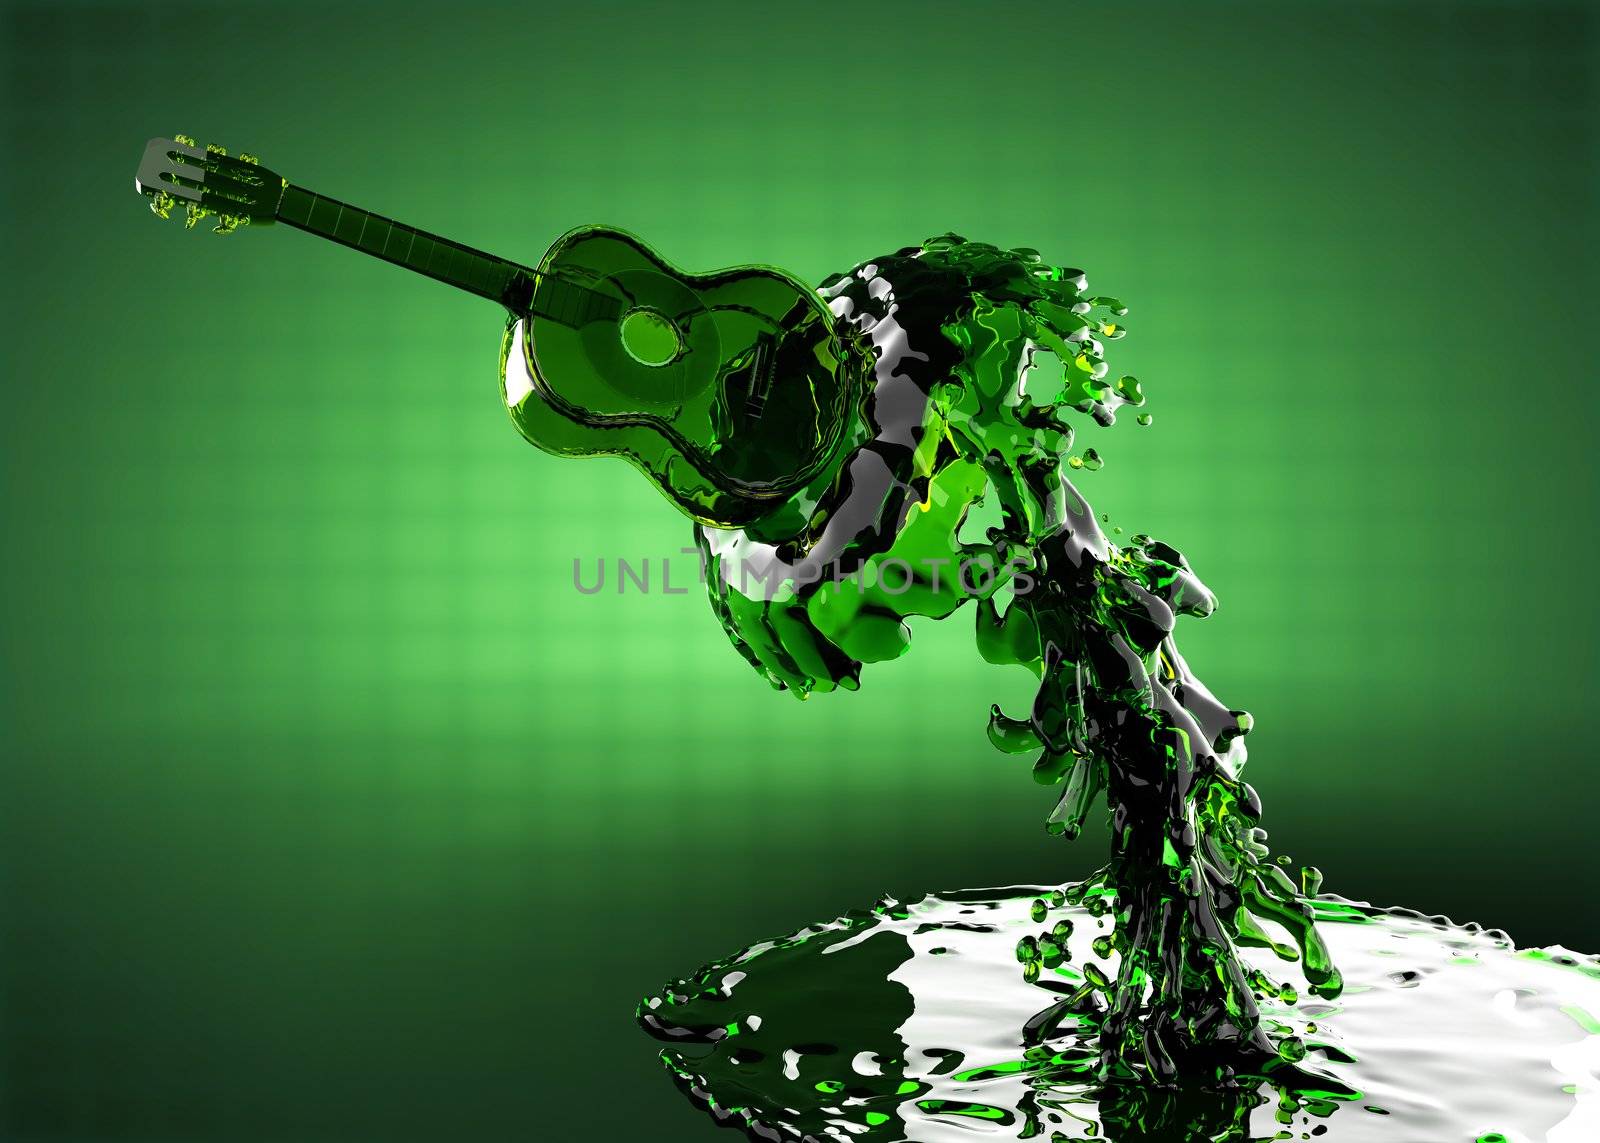 Guitar in water by videodoctor